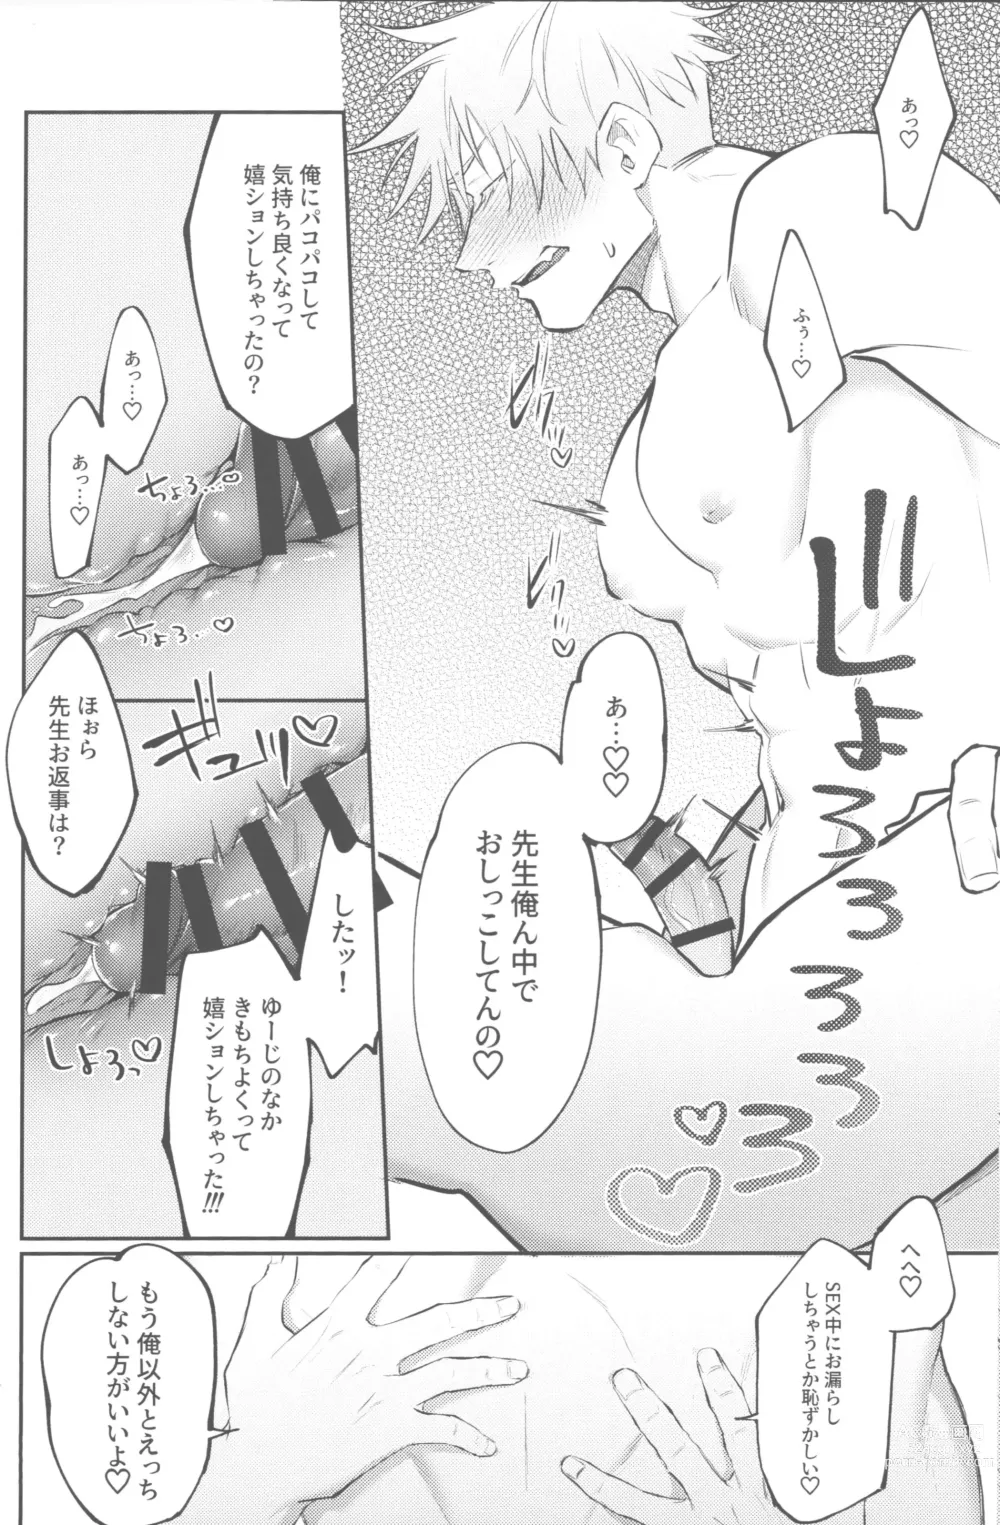 Page 22 of doujinshi Mune no Uchi Seiippai